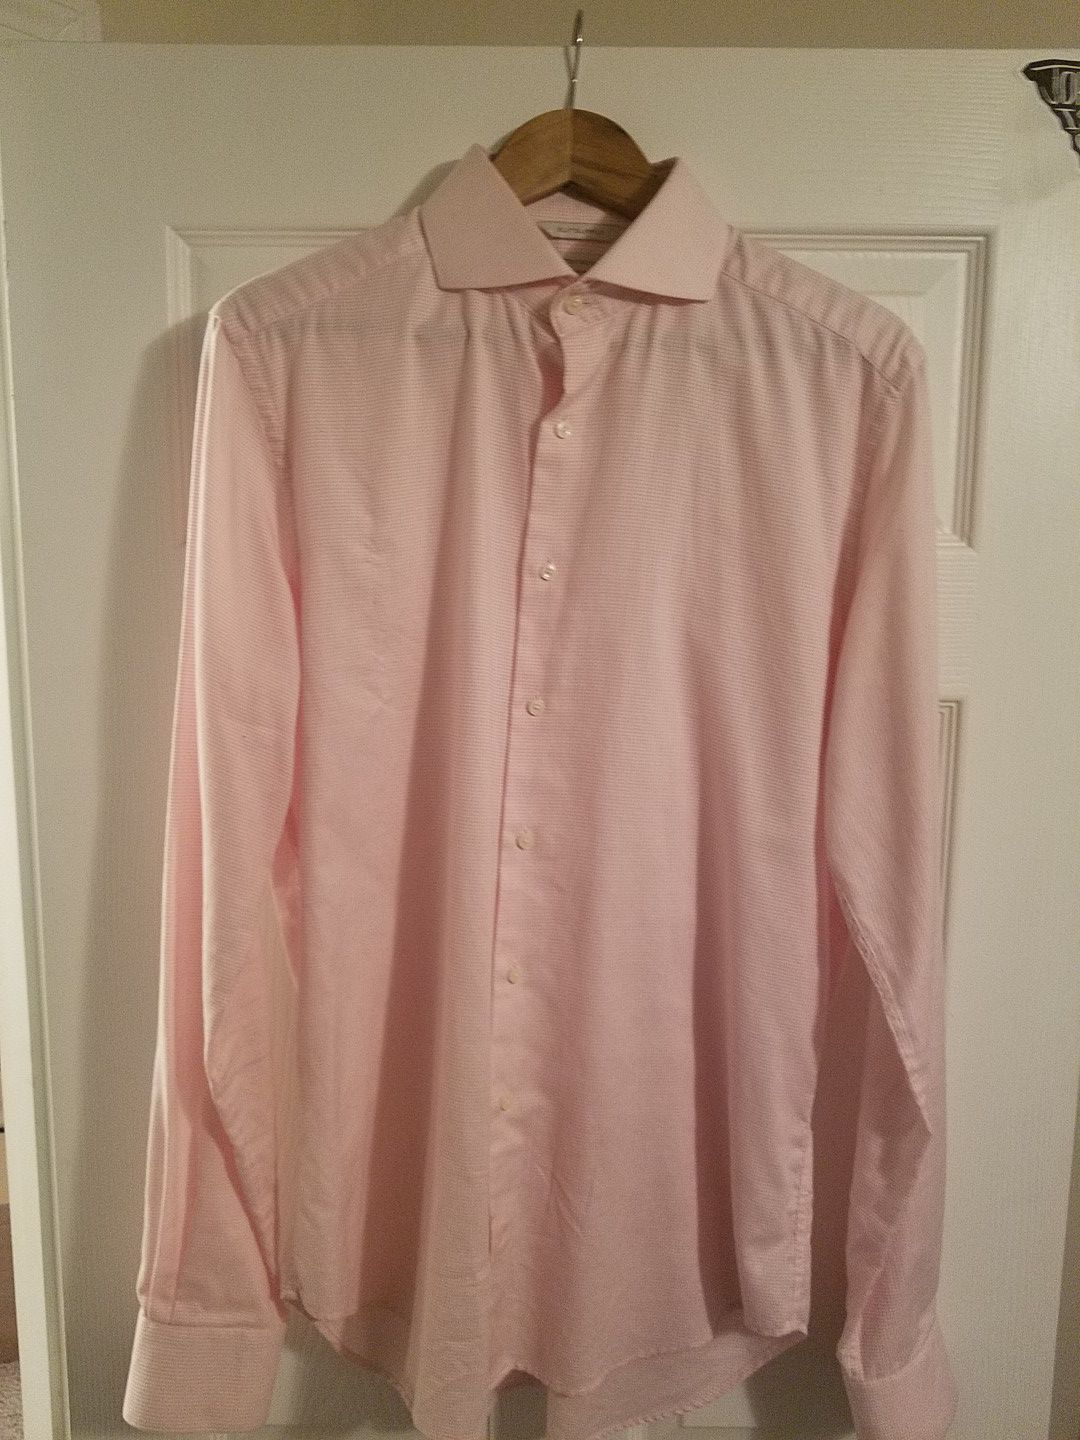 Suit Supply shirt, pink 16 1/2 L